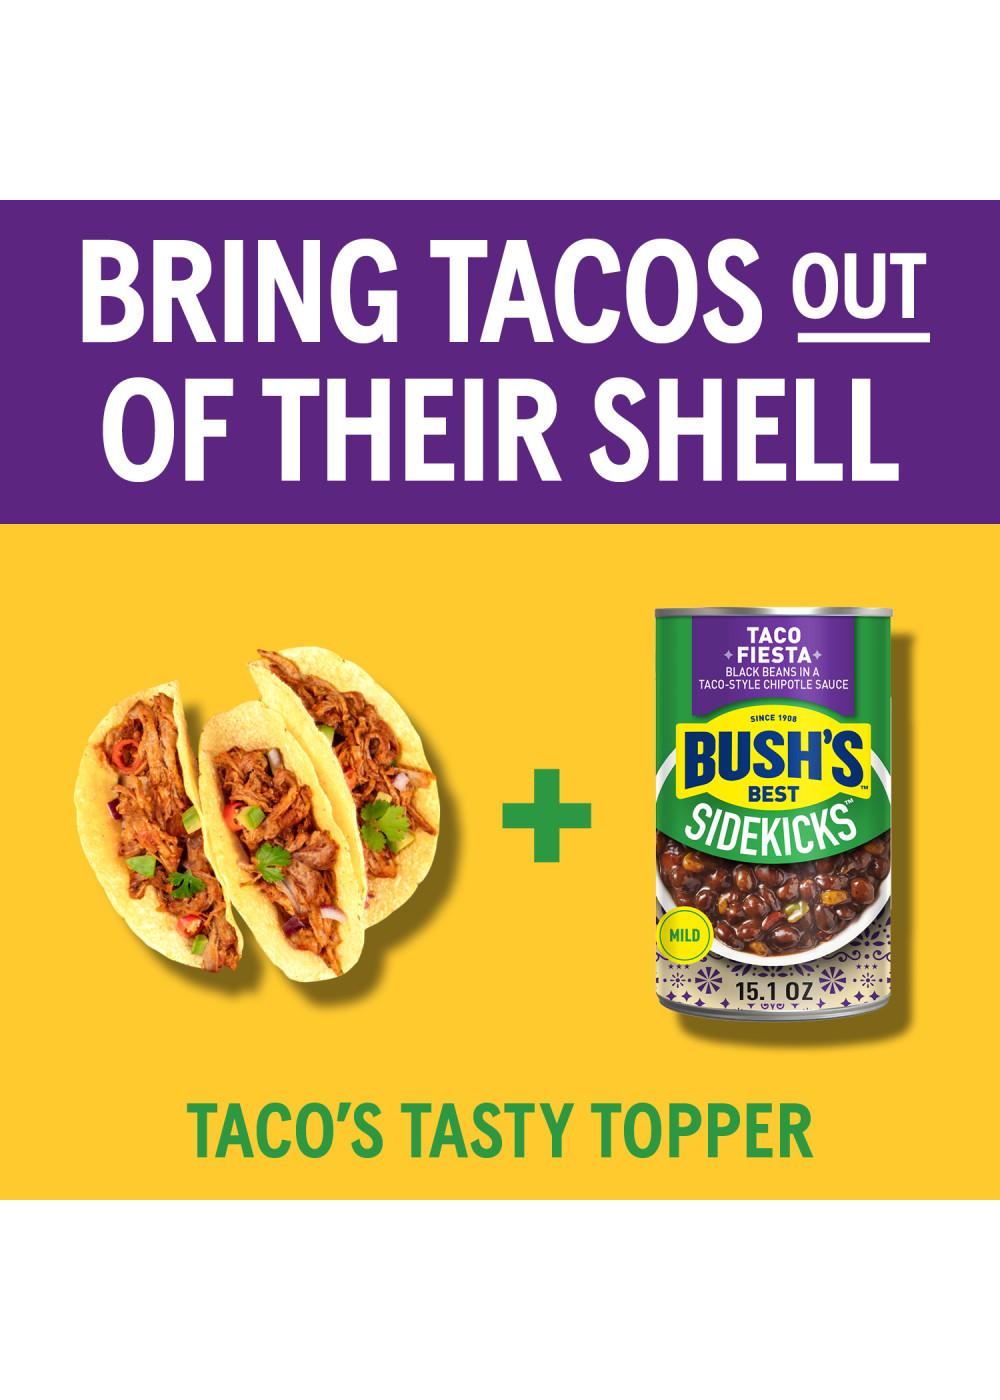 Bush's Best Sidekicks Taco Fiesta Black Beans; image 2 of 4